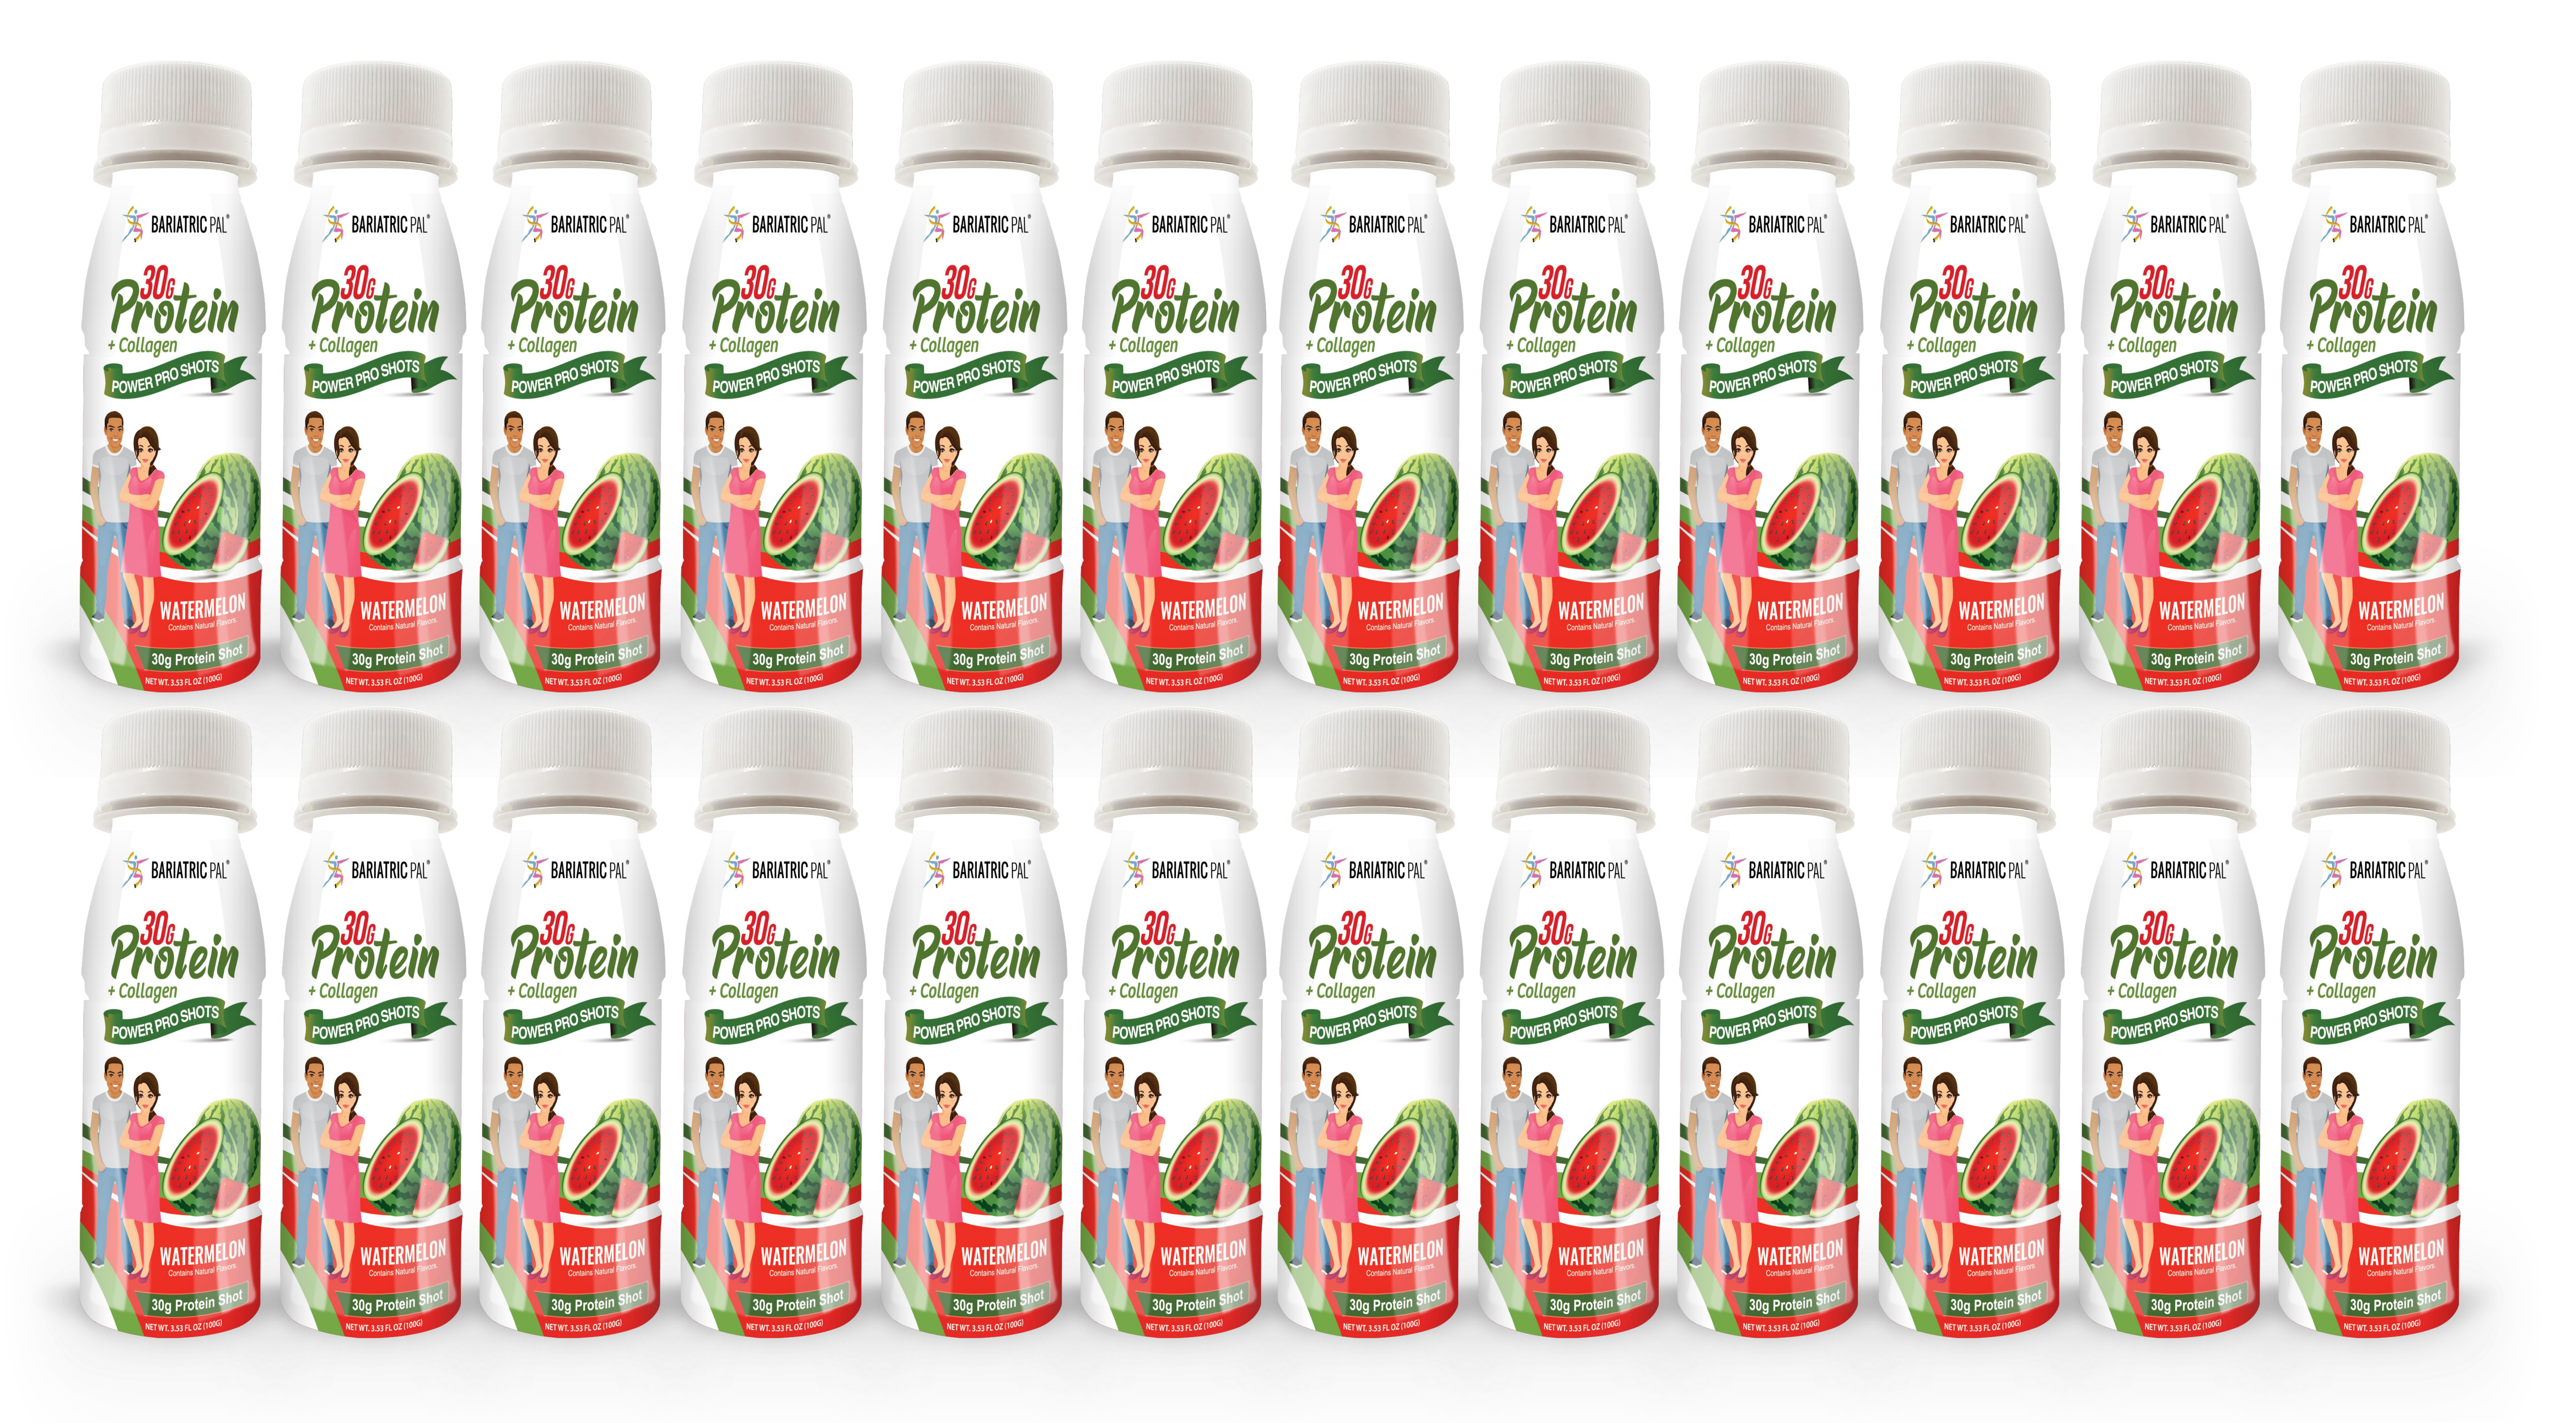 BariatricPal 30g Whey & Collagen Complete Protein Power Pro Shots - Watermelon (Brand New!)